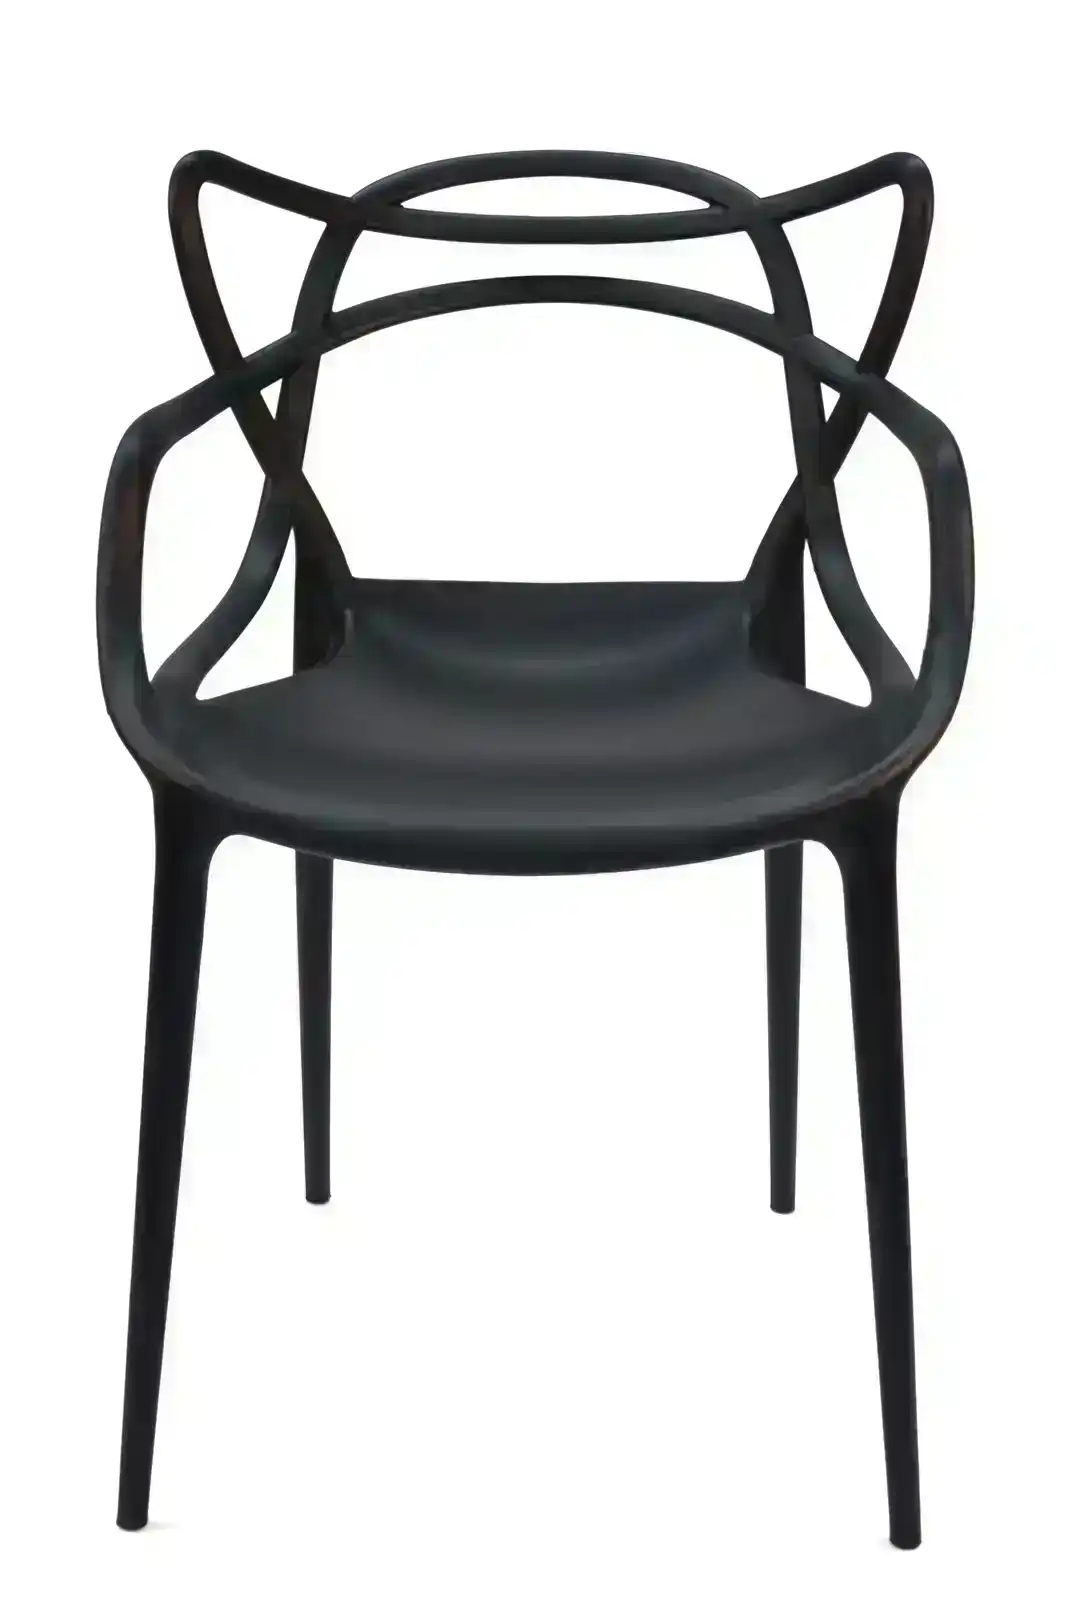 Replica Philippe Starck Masters Chair